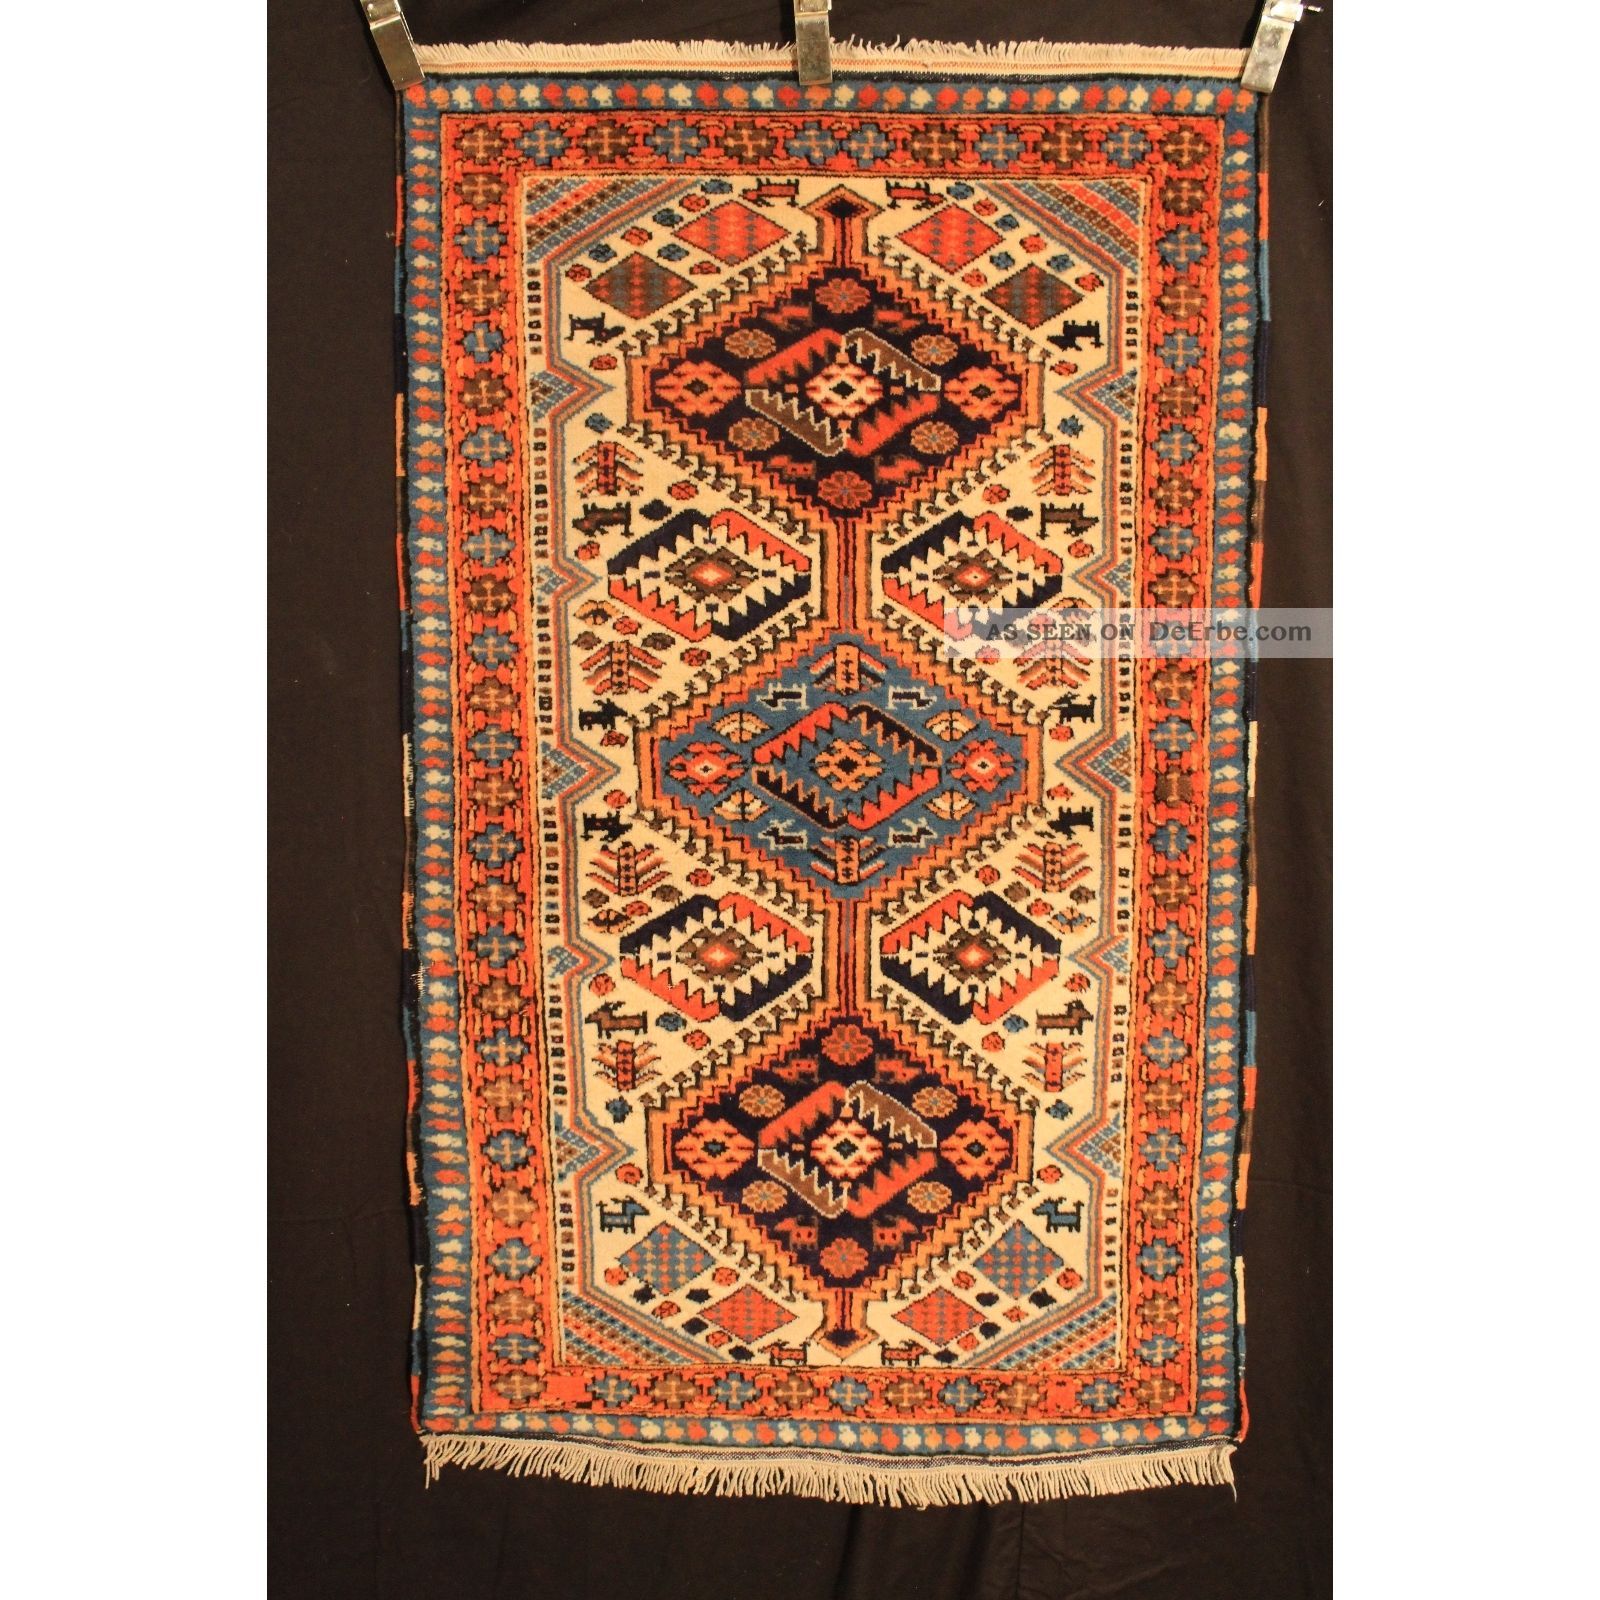 Antik Handgeknüpfter Sammler Teppich Kazak Sh Iraz Carpet Tappeto Tapis 80x130cm Teppiche & Flachgewebe Bild